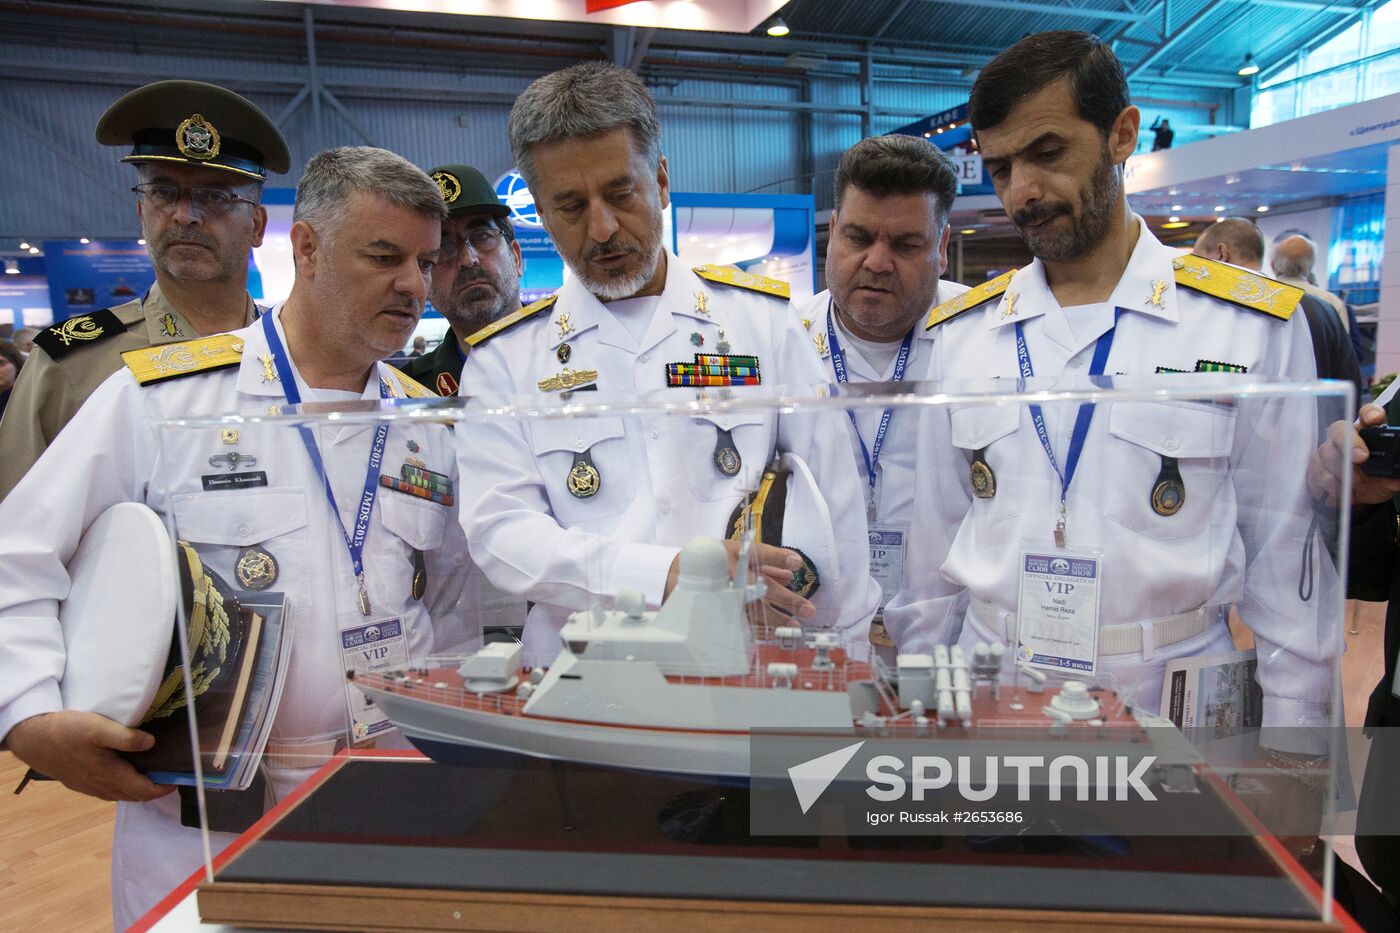 International Maritime Defense Show in St. Petersburg